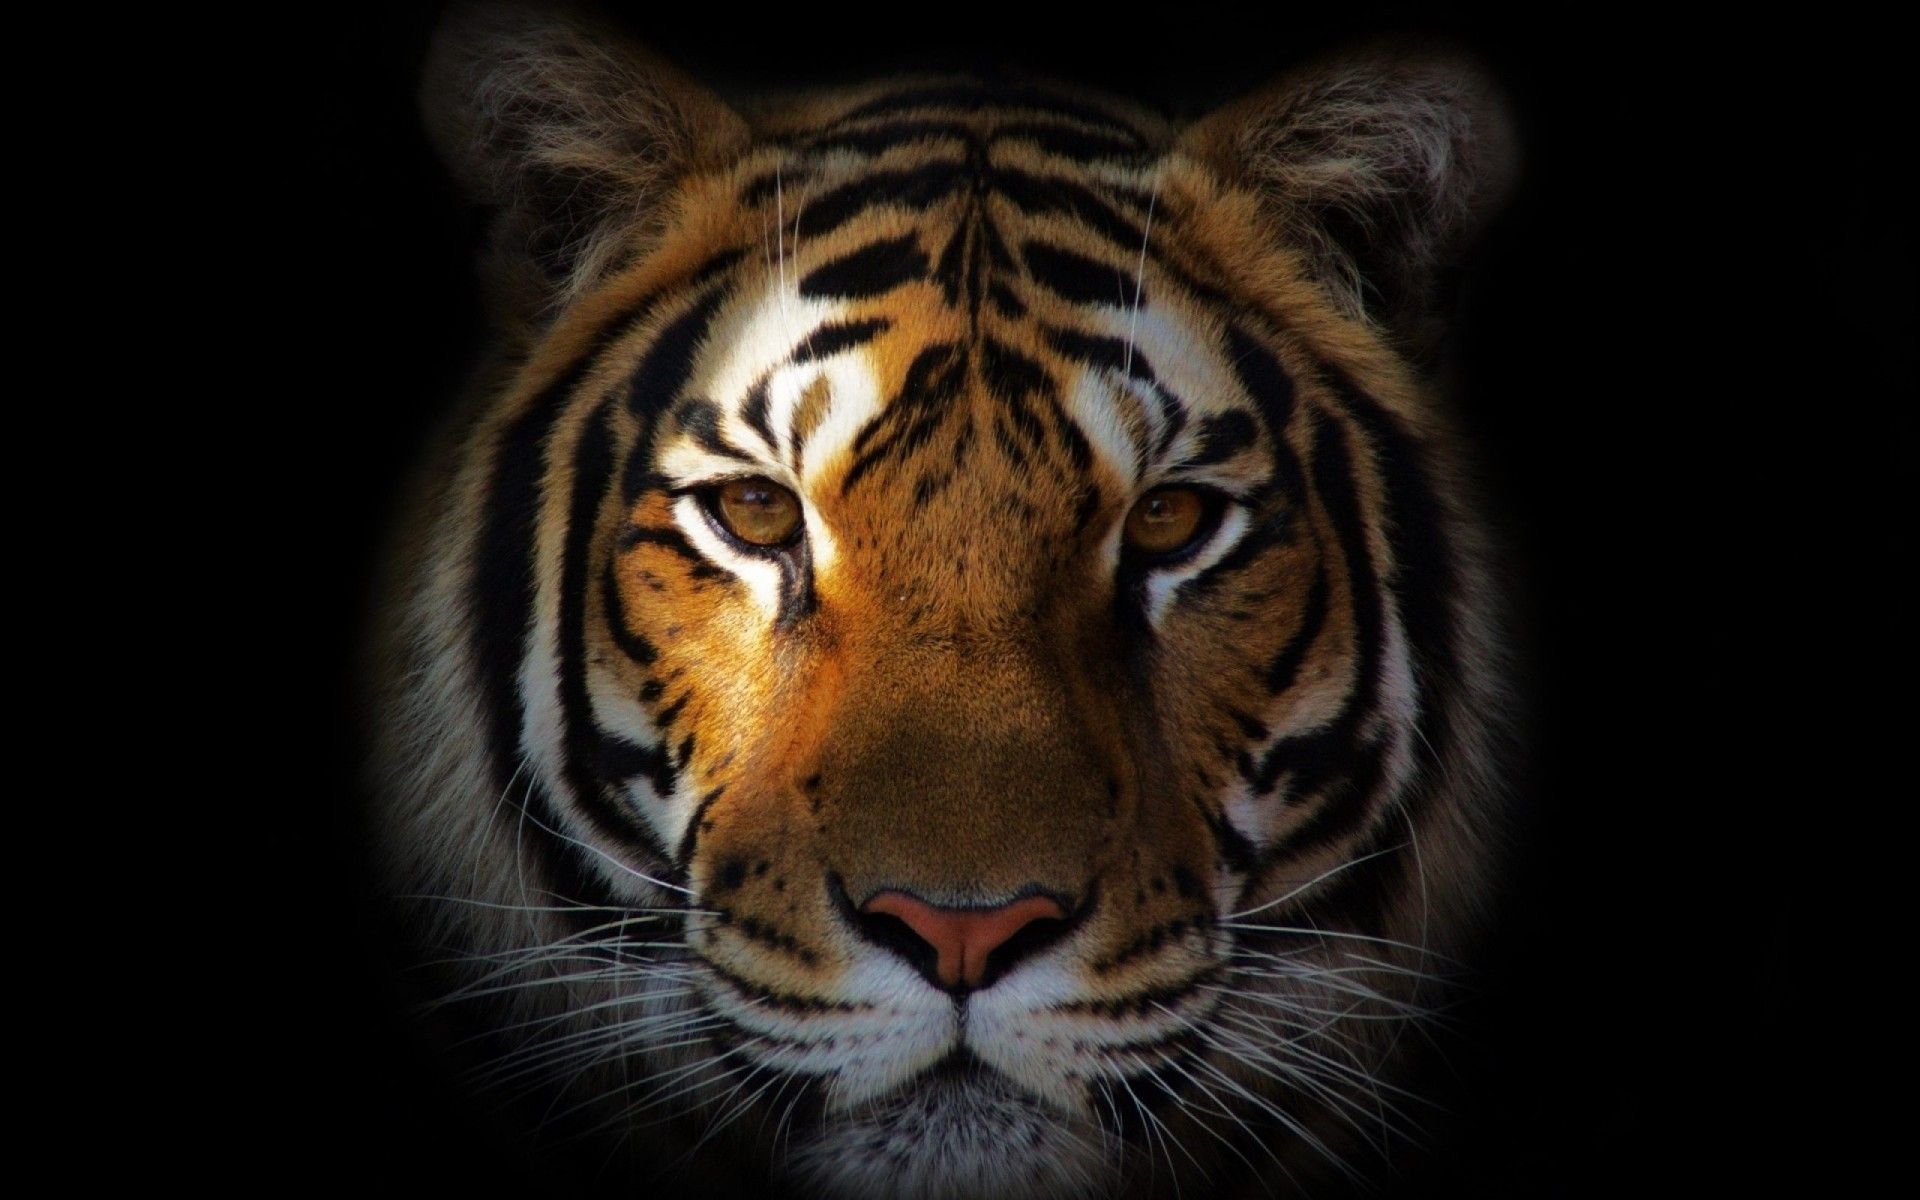 Tiger Face HD Wallpaper Download For Laptop & Mobile